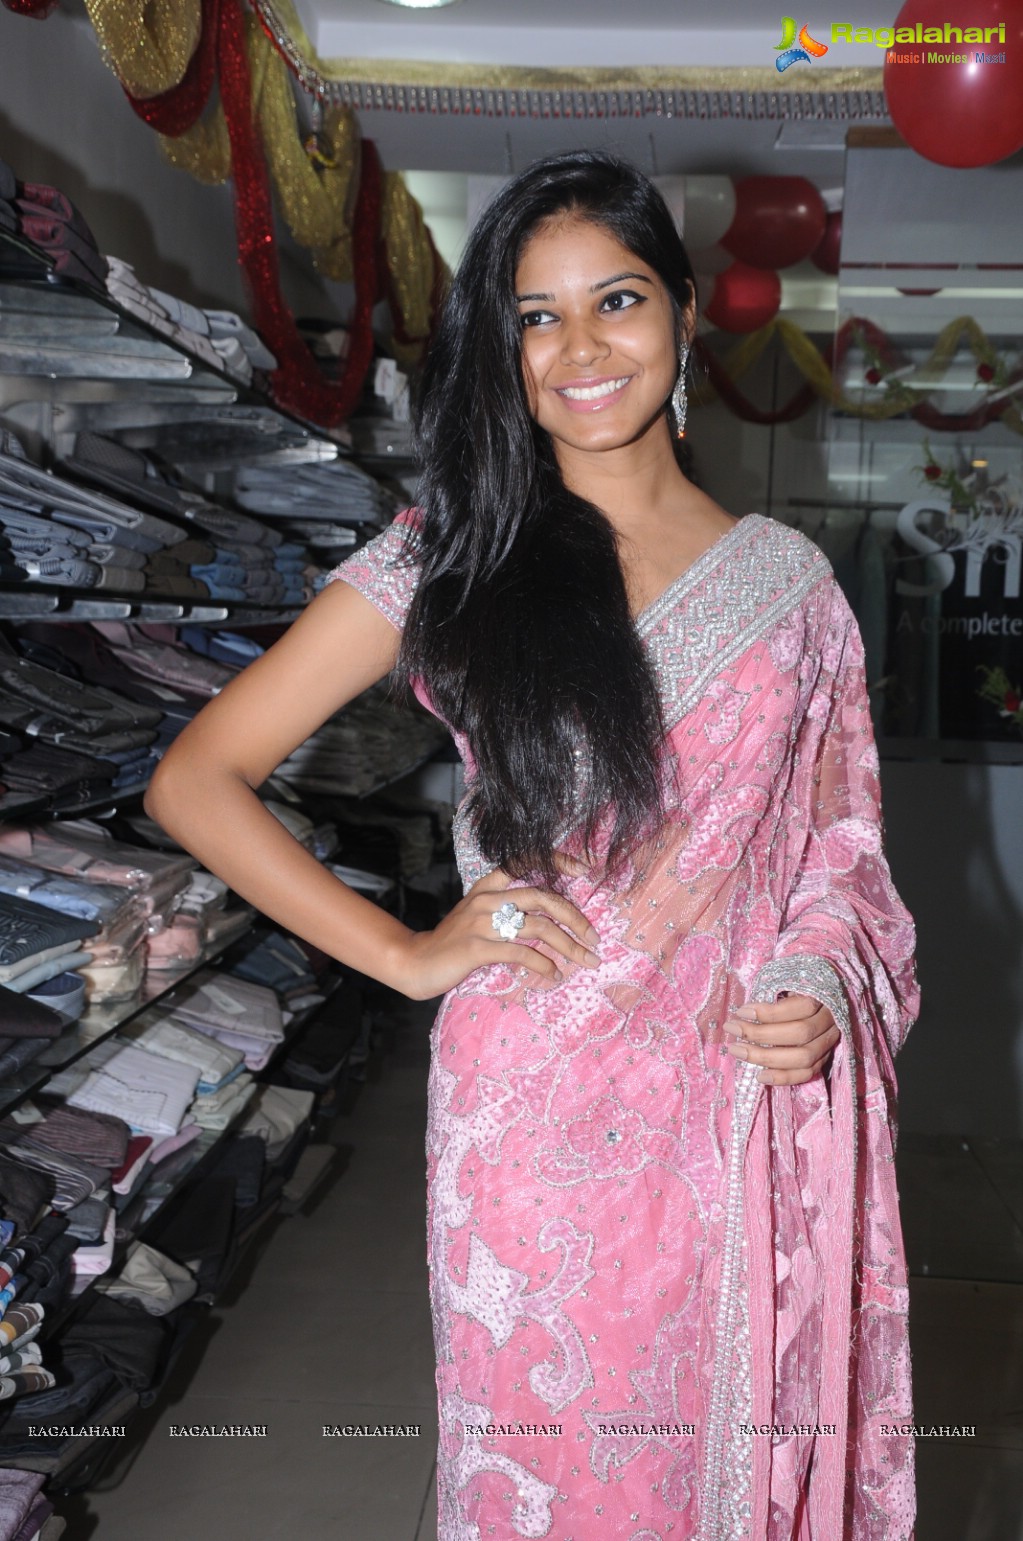 Hyderabad Subham Stores 1st Anniversary Discount Sales